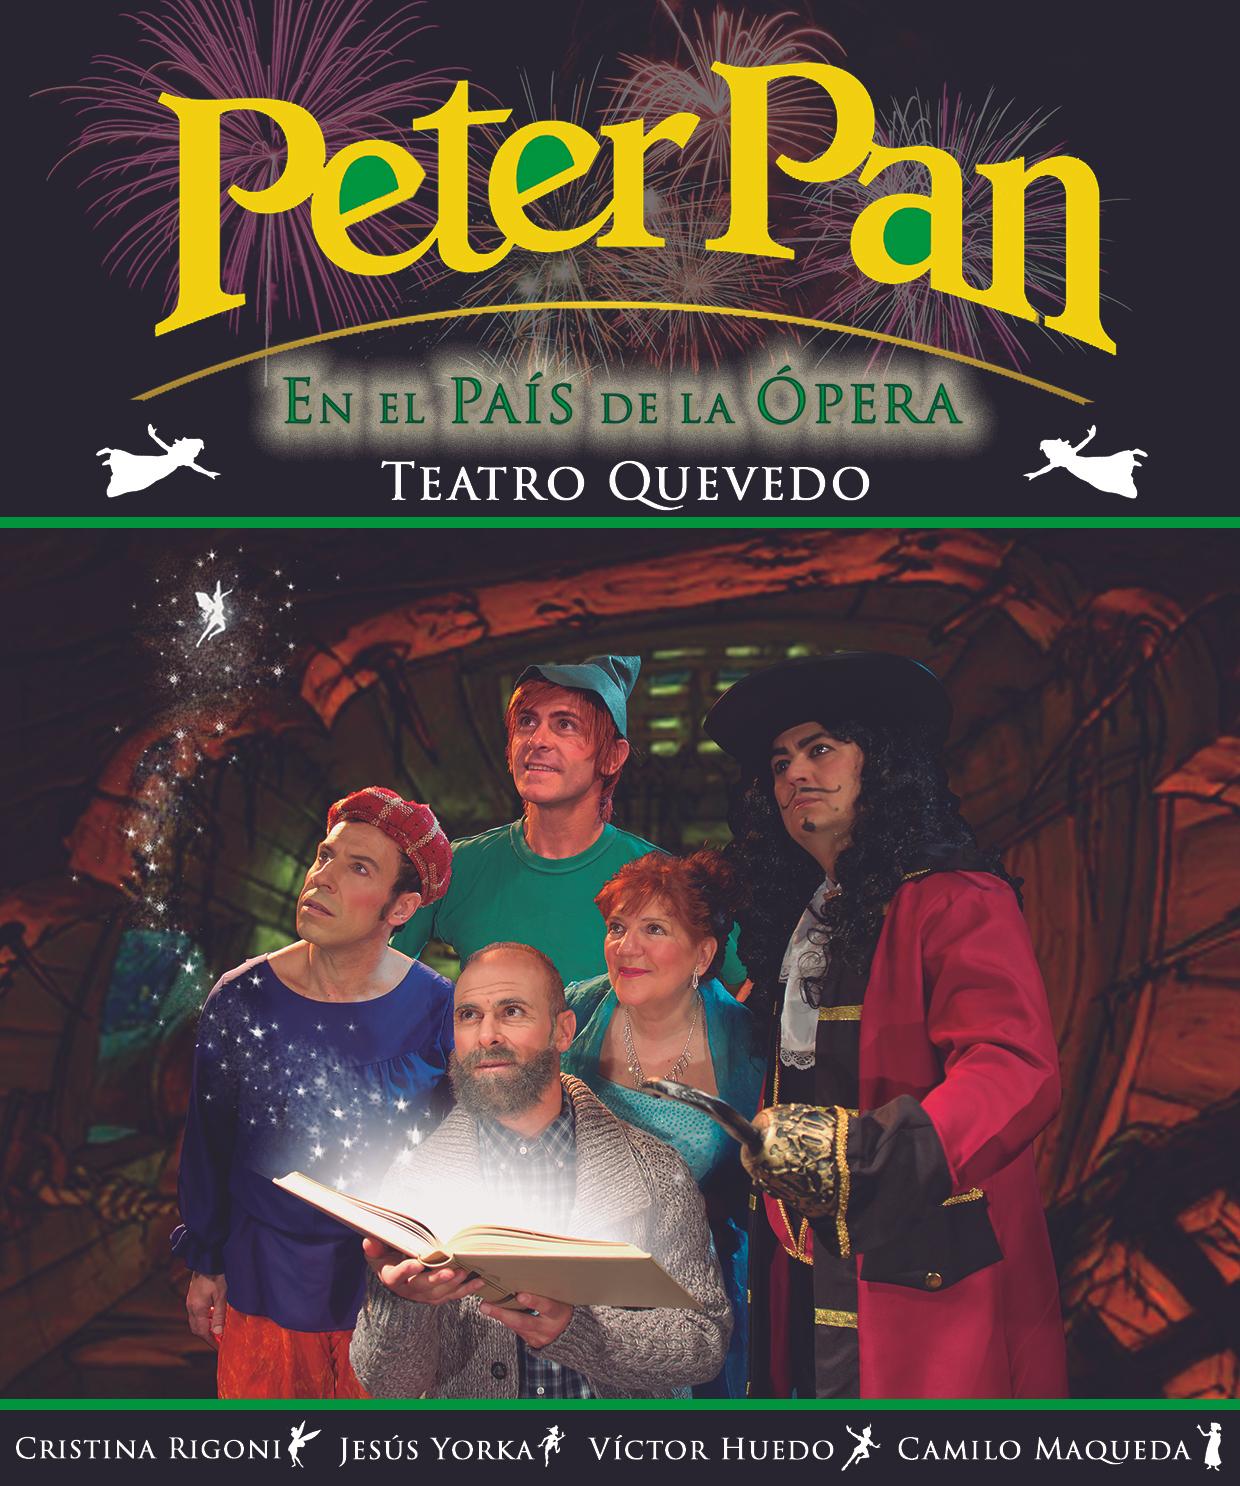 Peter Pan: en el país de la Ópera